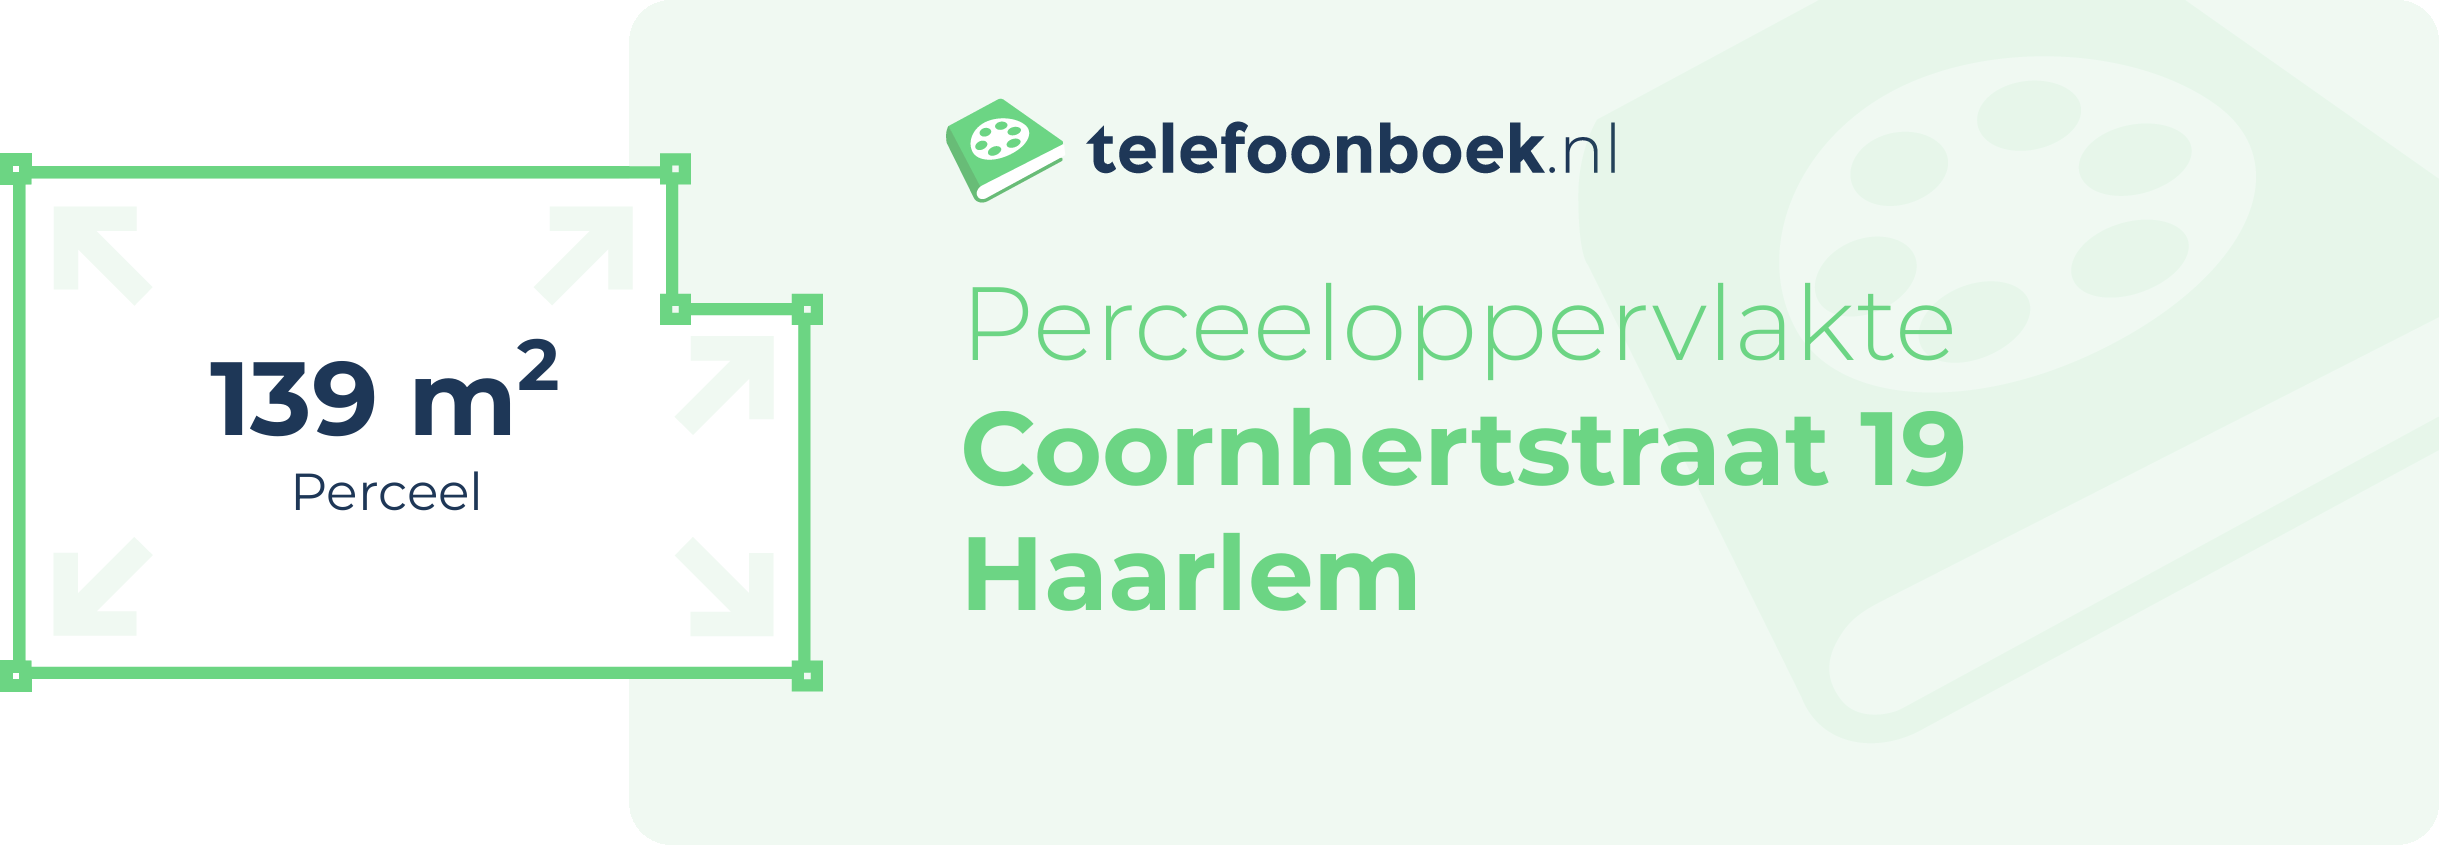 Perceeloppervlakte Coornhertstraat 19 Haarlem